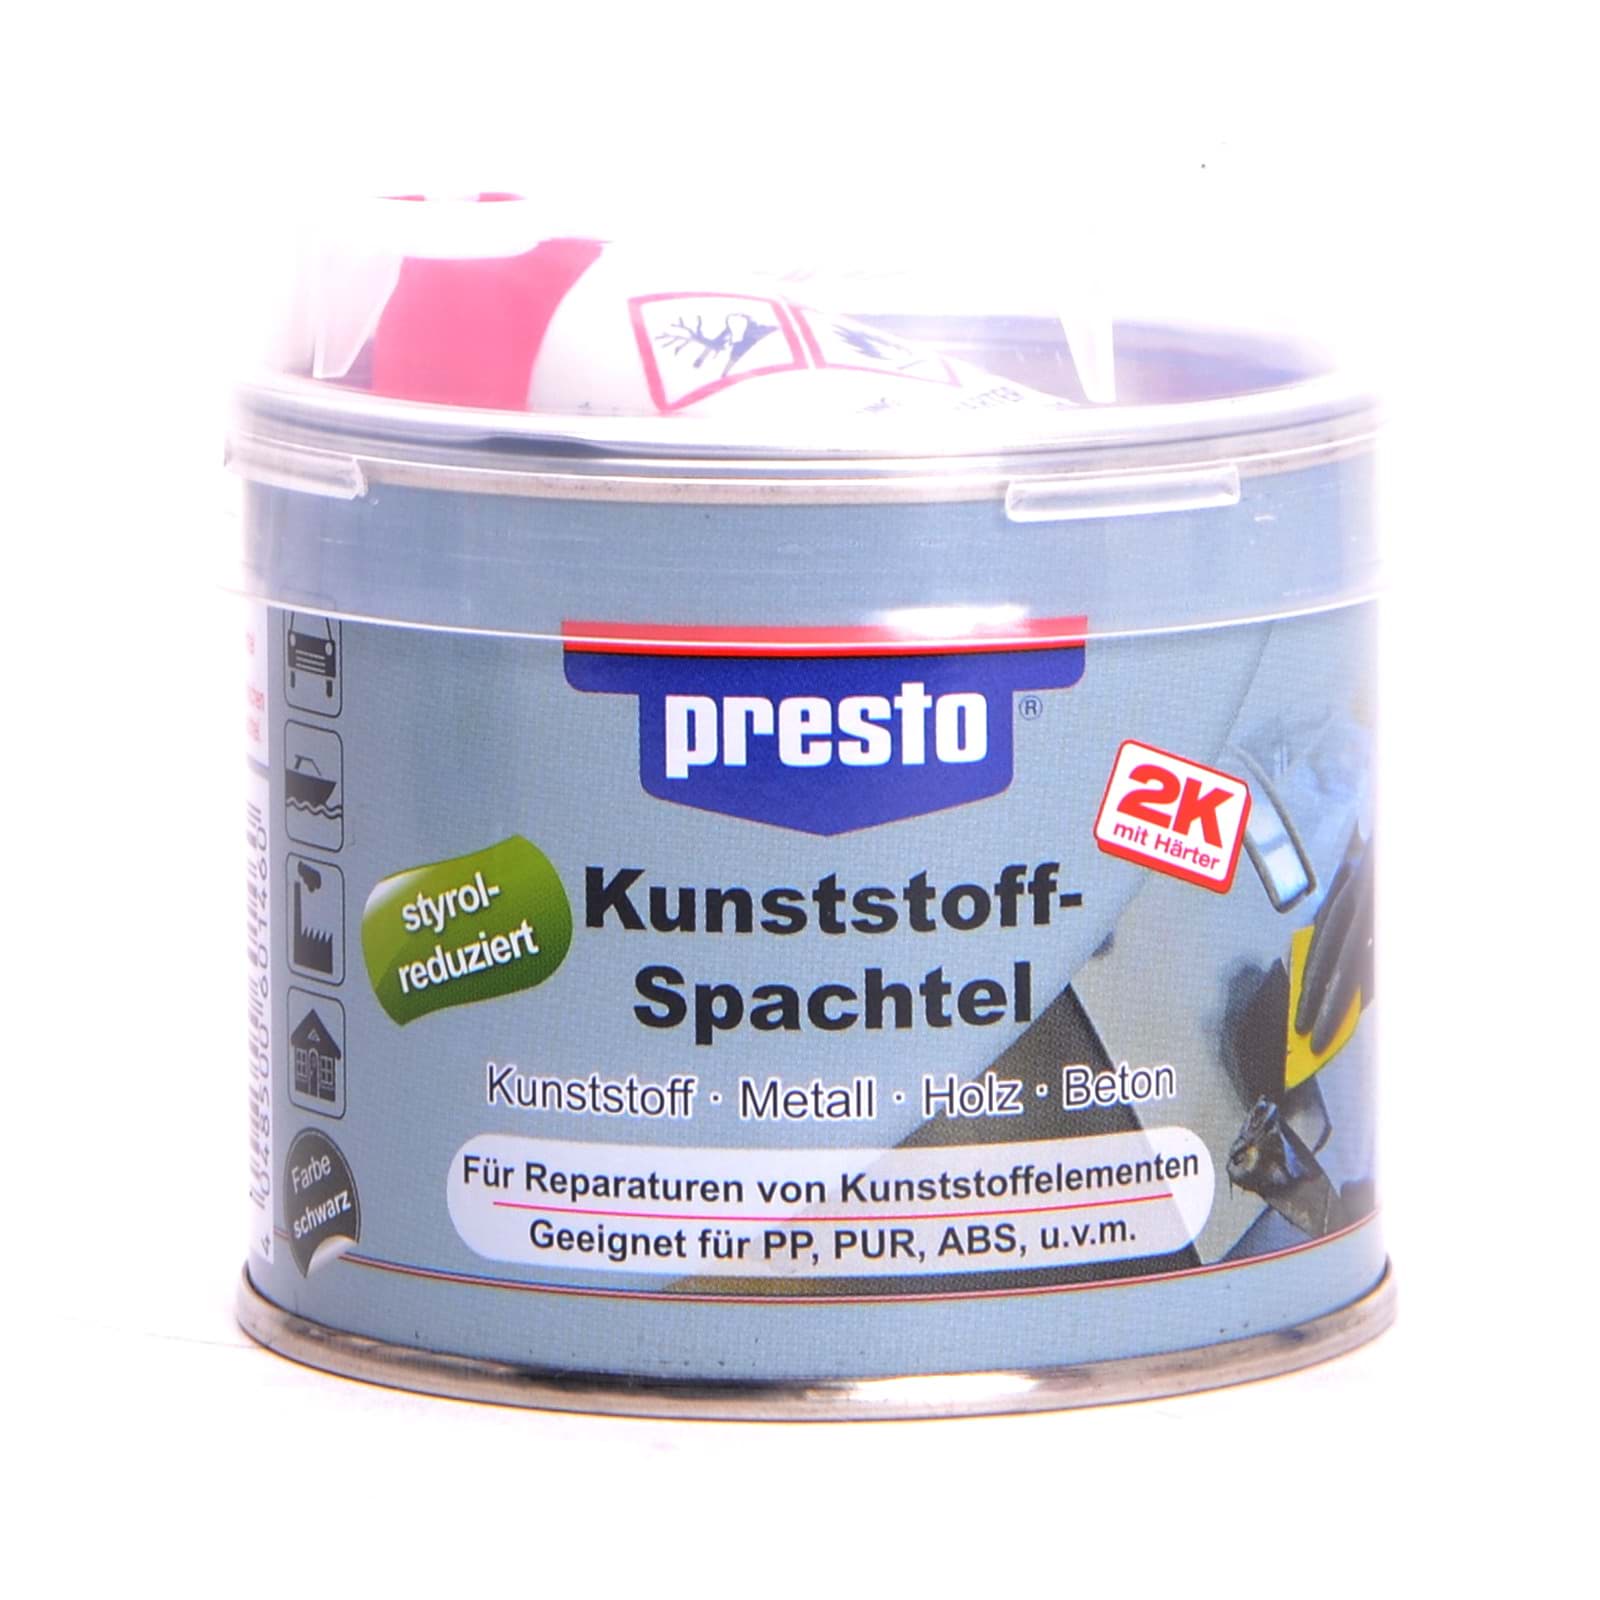 Picture of Presto Kunststoffspachtel Prestolith elastic 250g